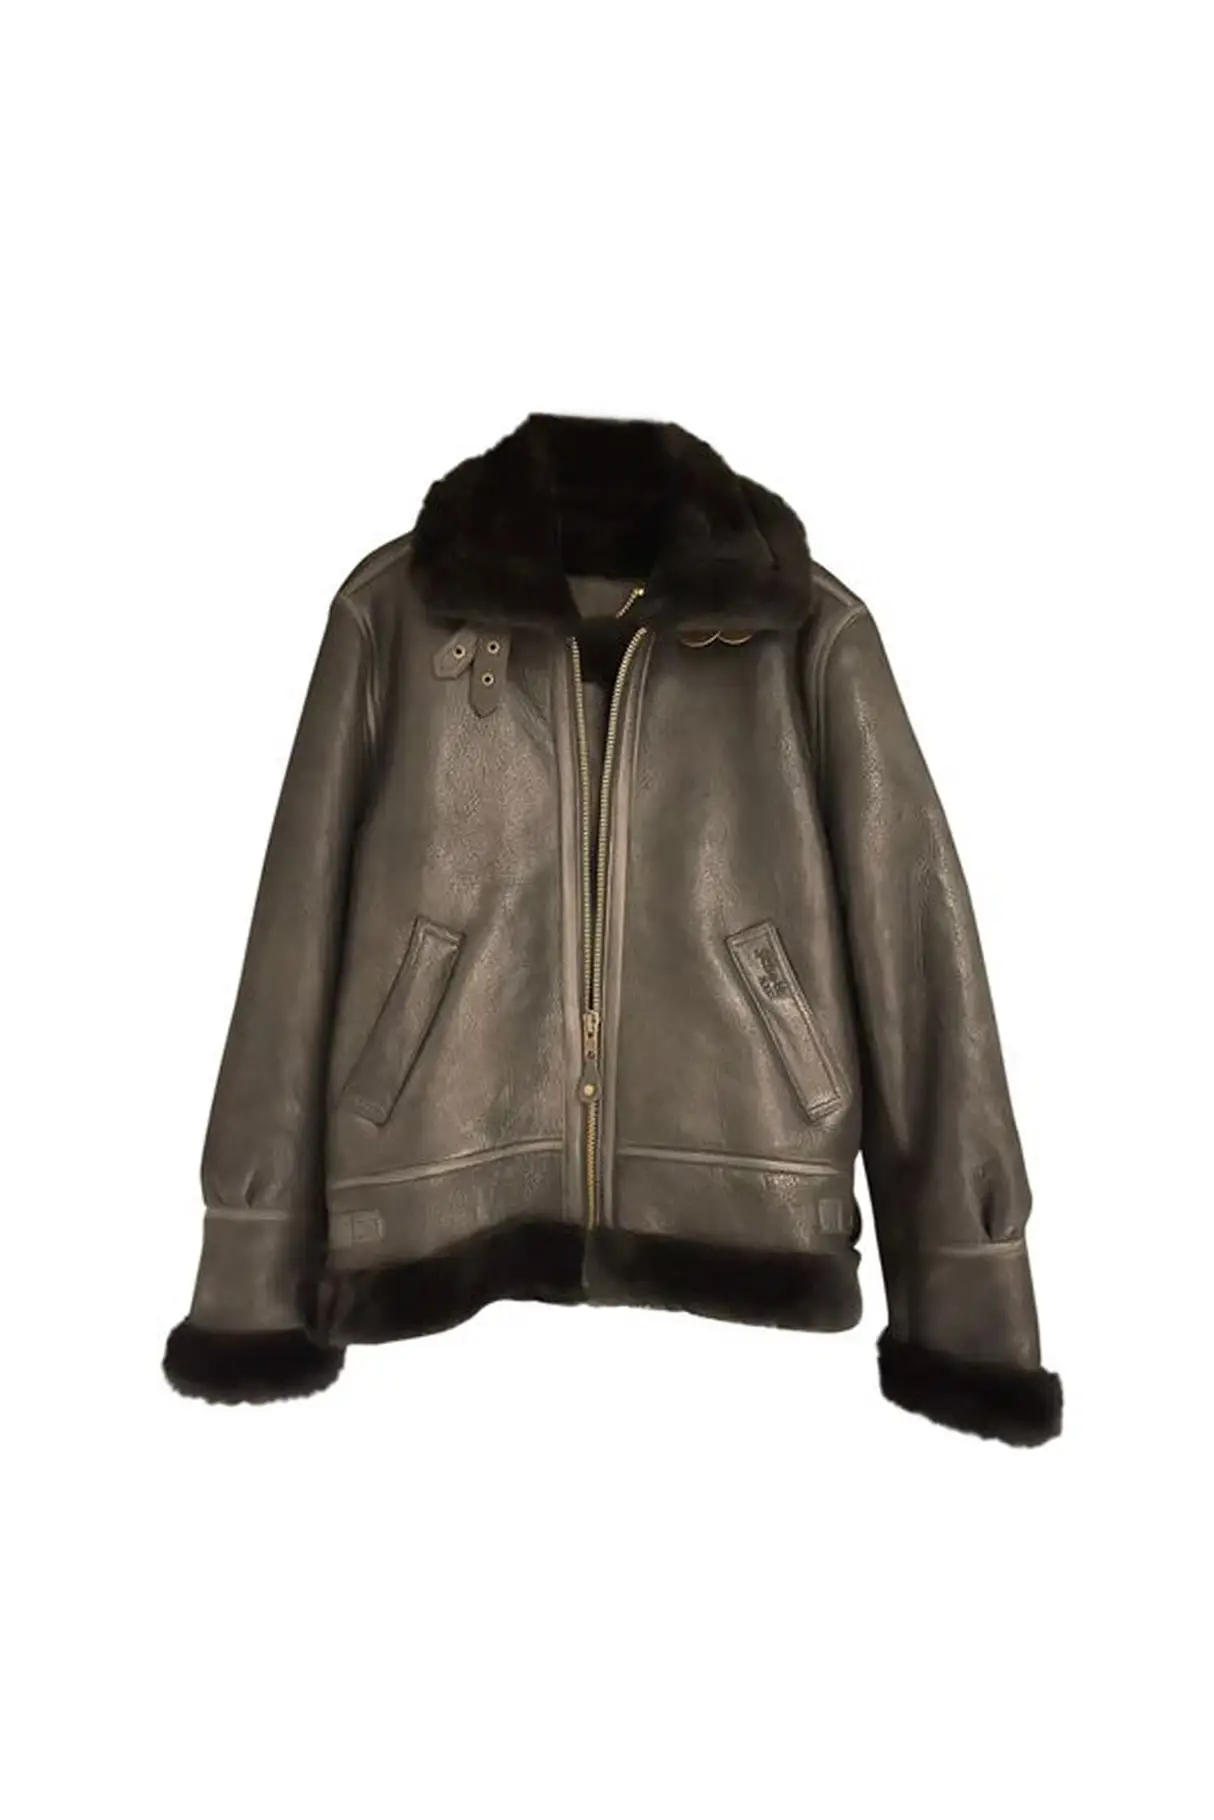 schott-leather-brown-jacket.jpg